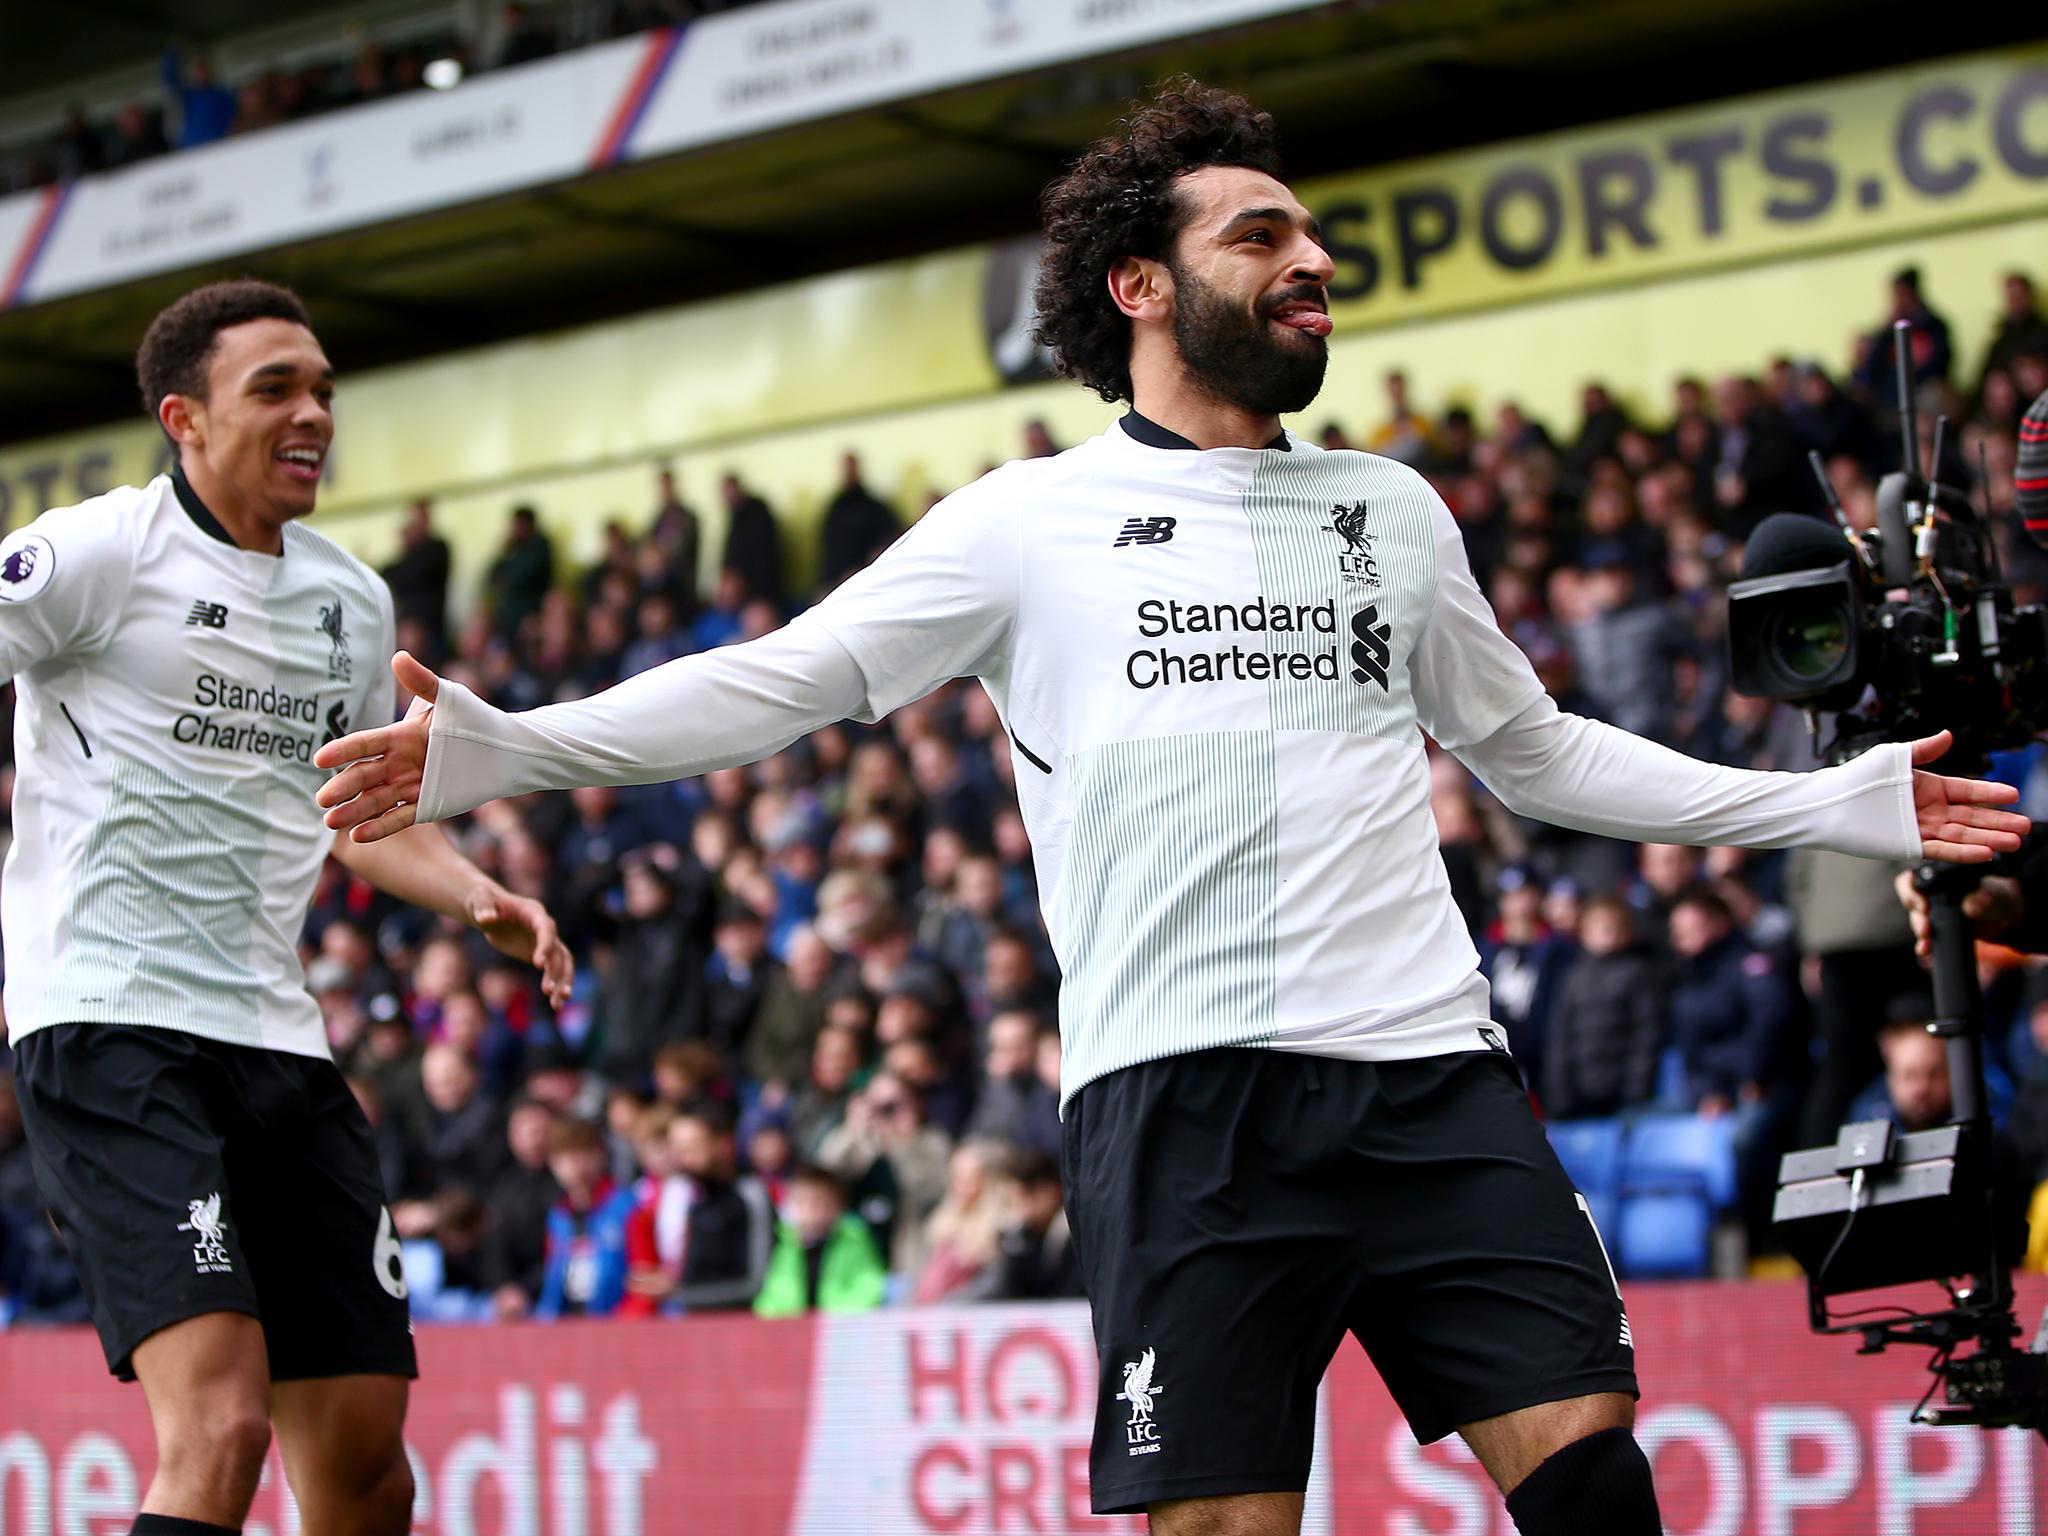 The Premier League's top goalscorer Mohamed Salah starts for Liverpool